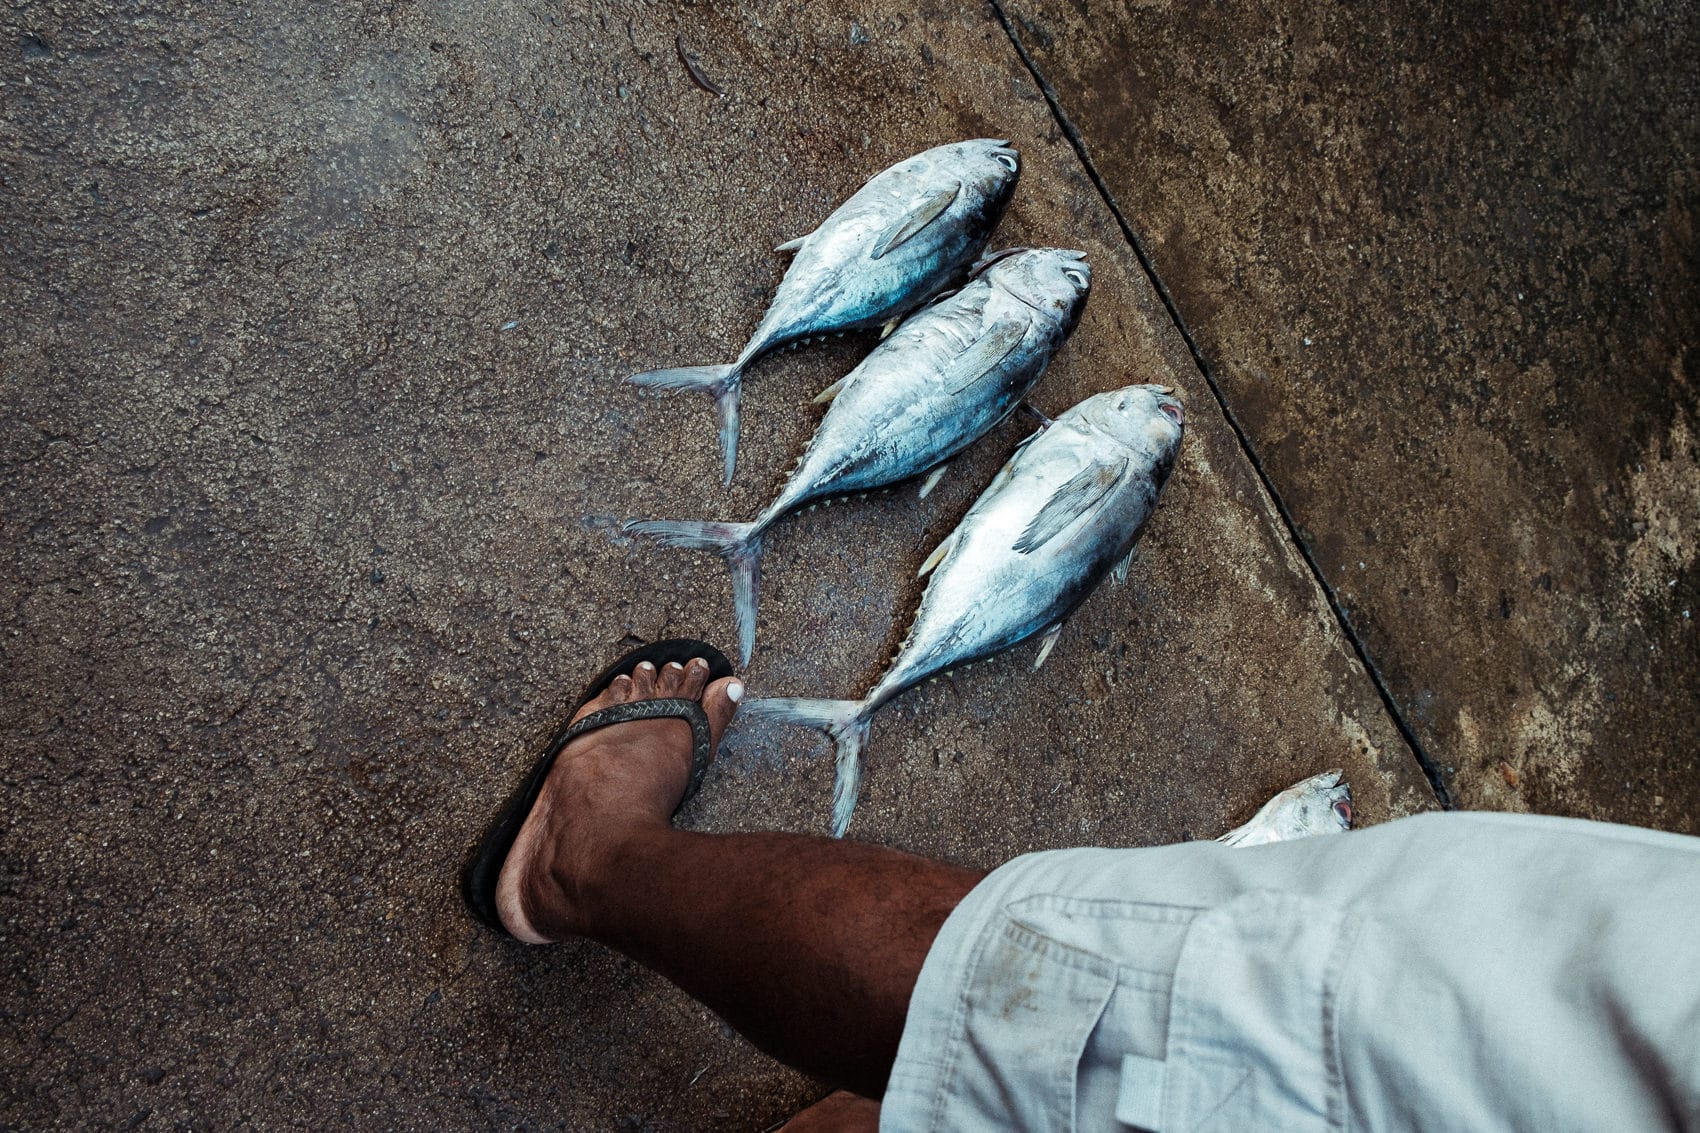 Fish market in Bentotta, Sri Lanka. January 2017